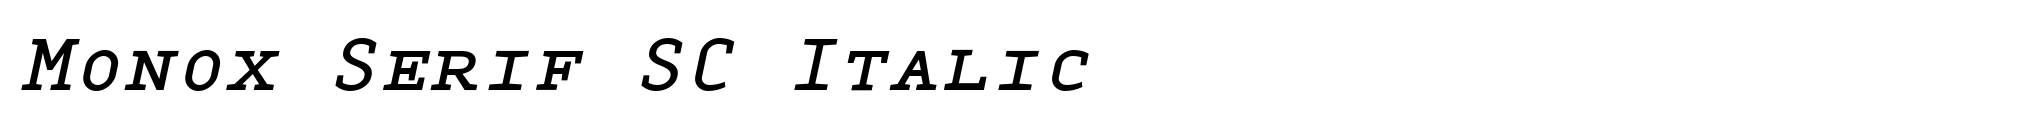 Monox Serif SC Italic image